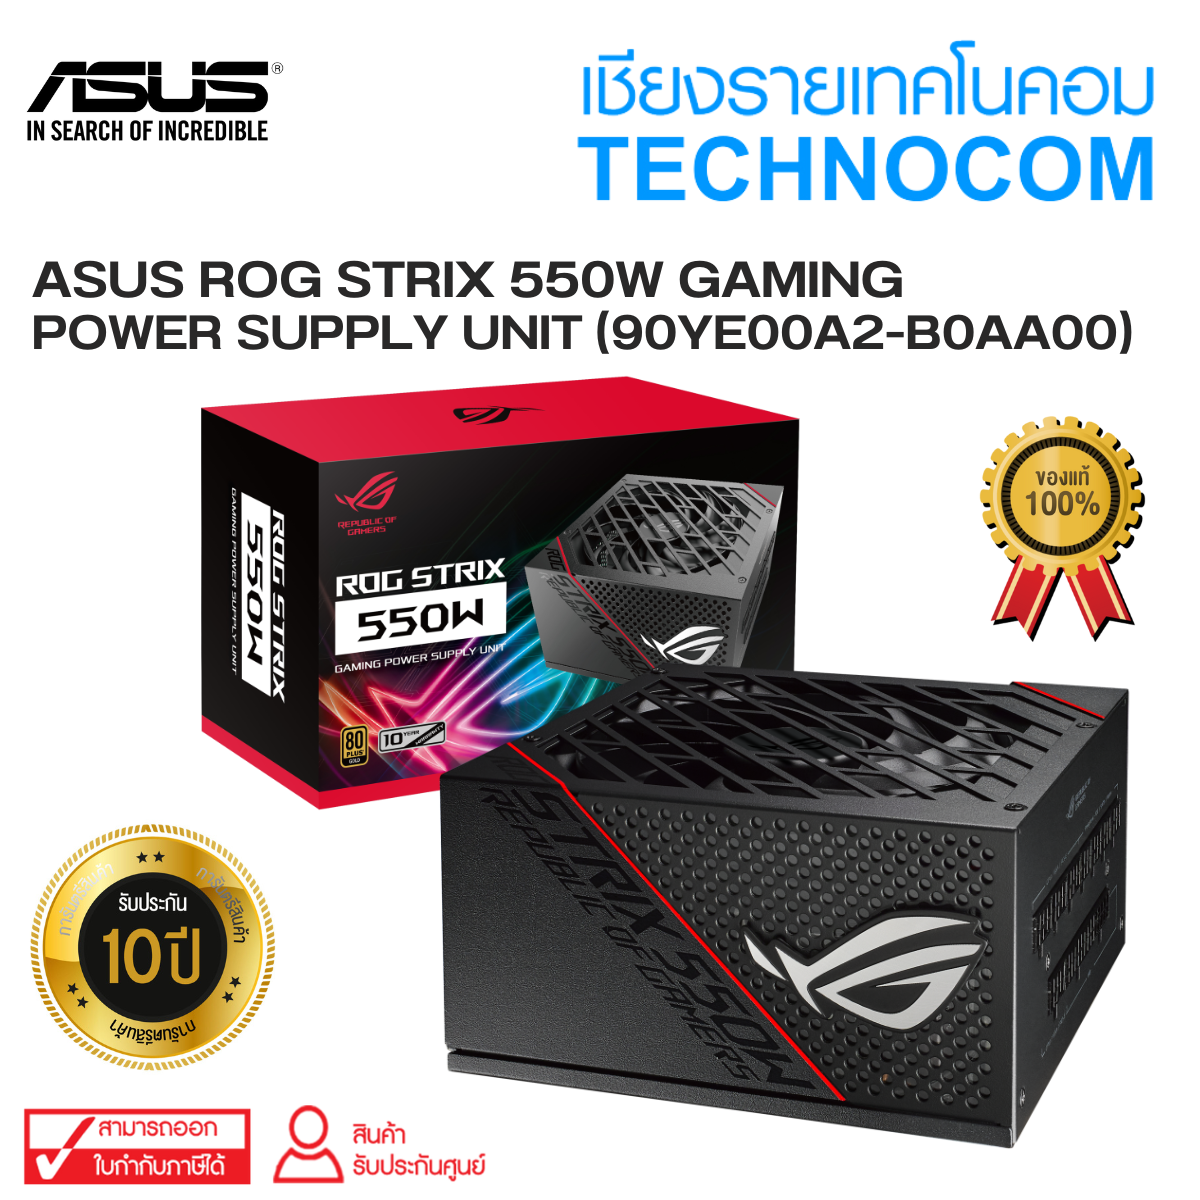 ASUS ROG STRIX 550W GAMING POWER SUPPLY UNIT (90YE00A2-B0AA00)